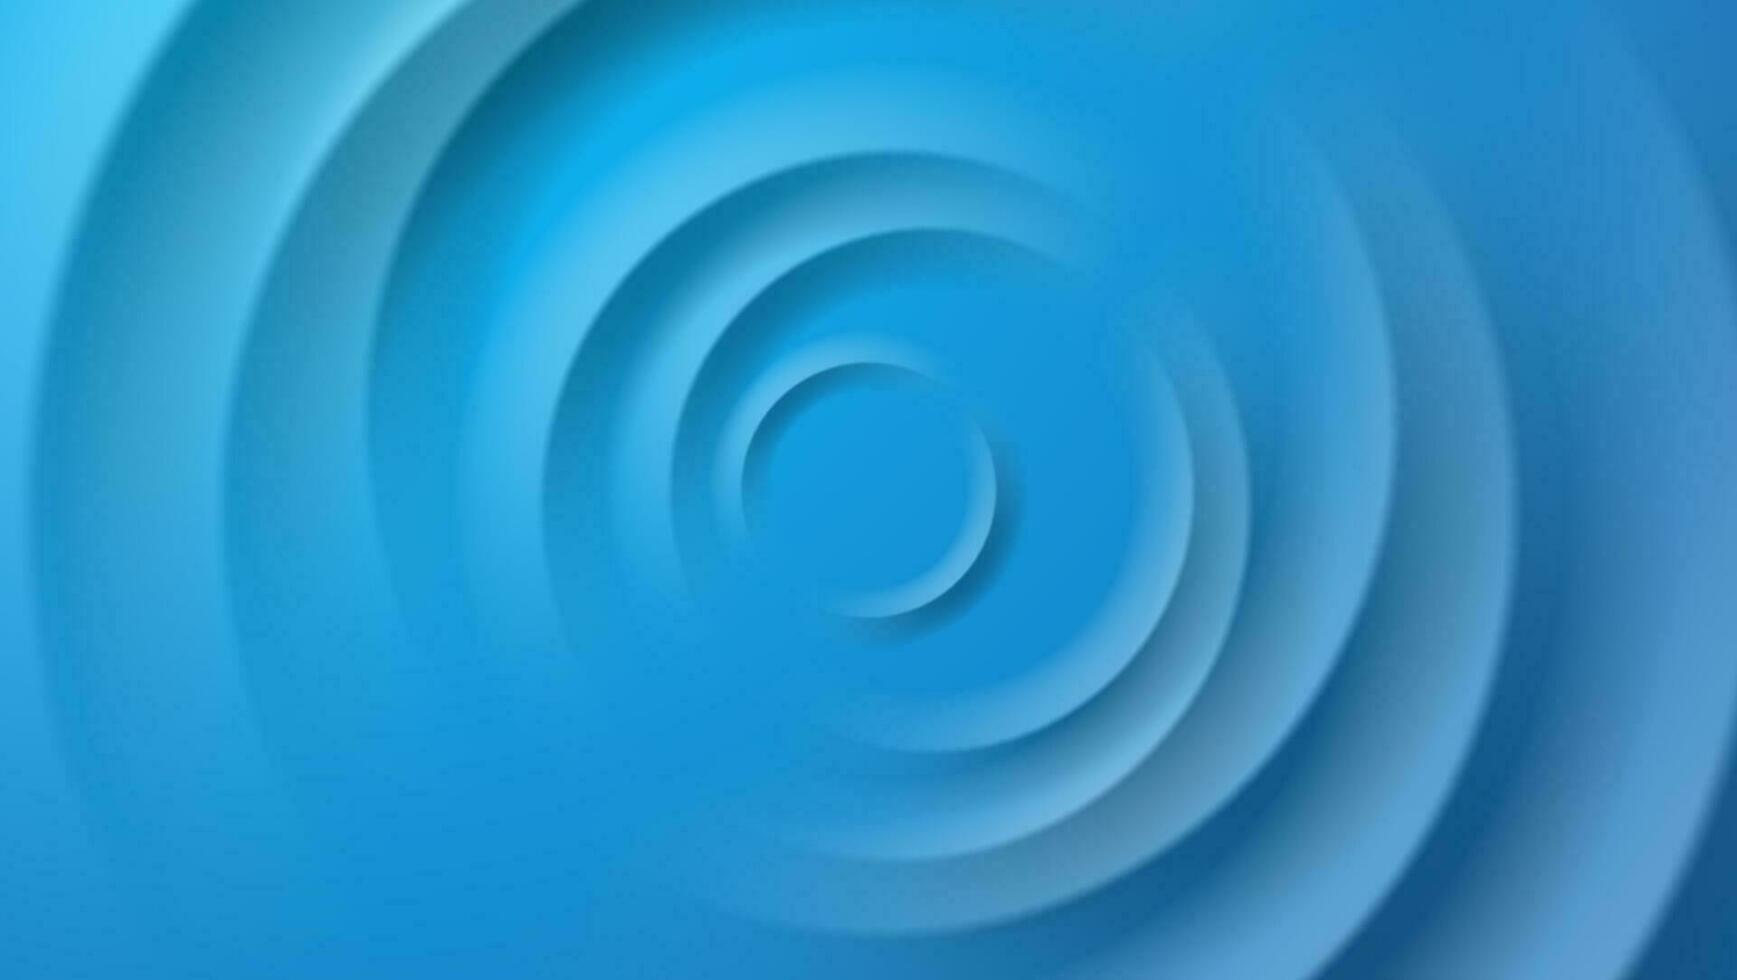 abstract blue circle background for website, presentation, banner, poster, etc. vector illustration